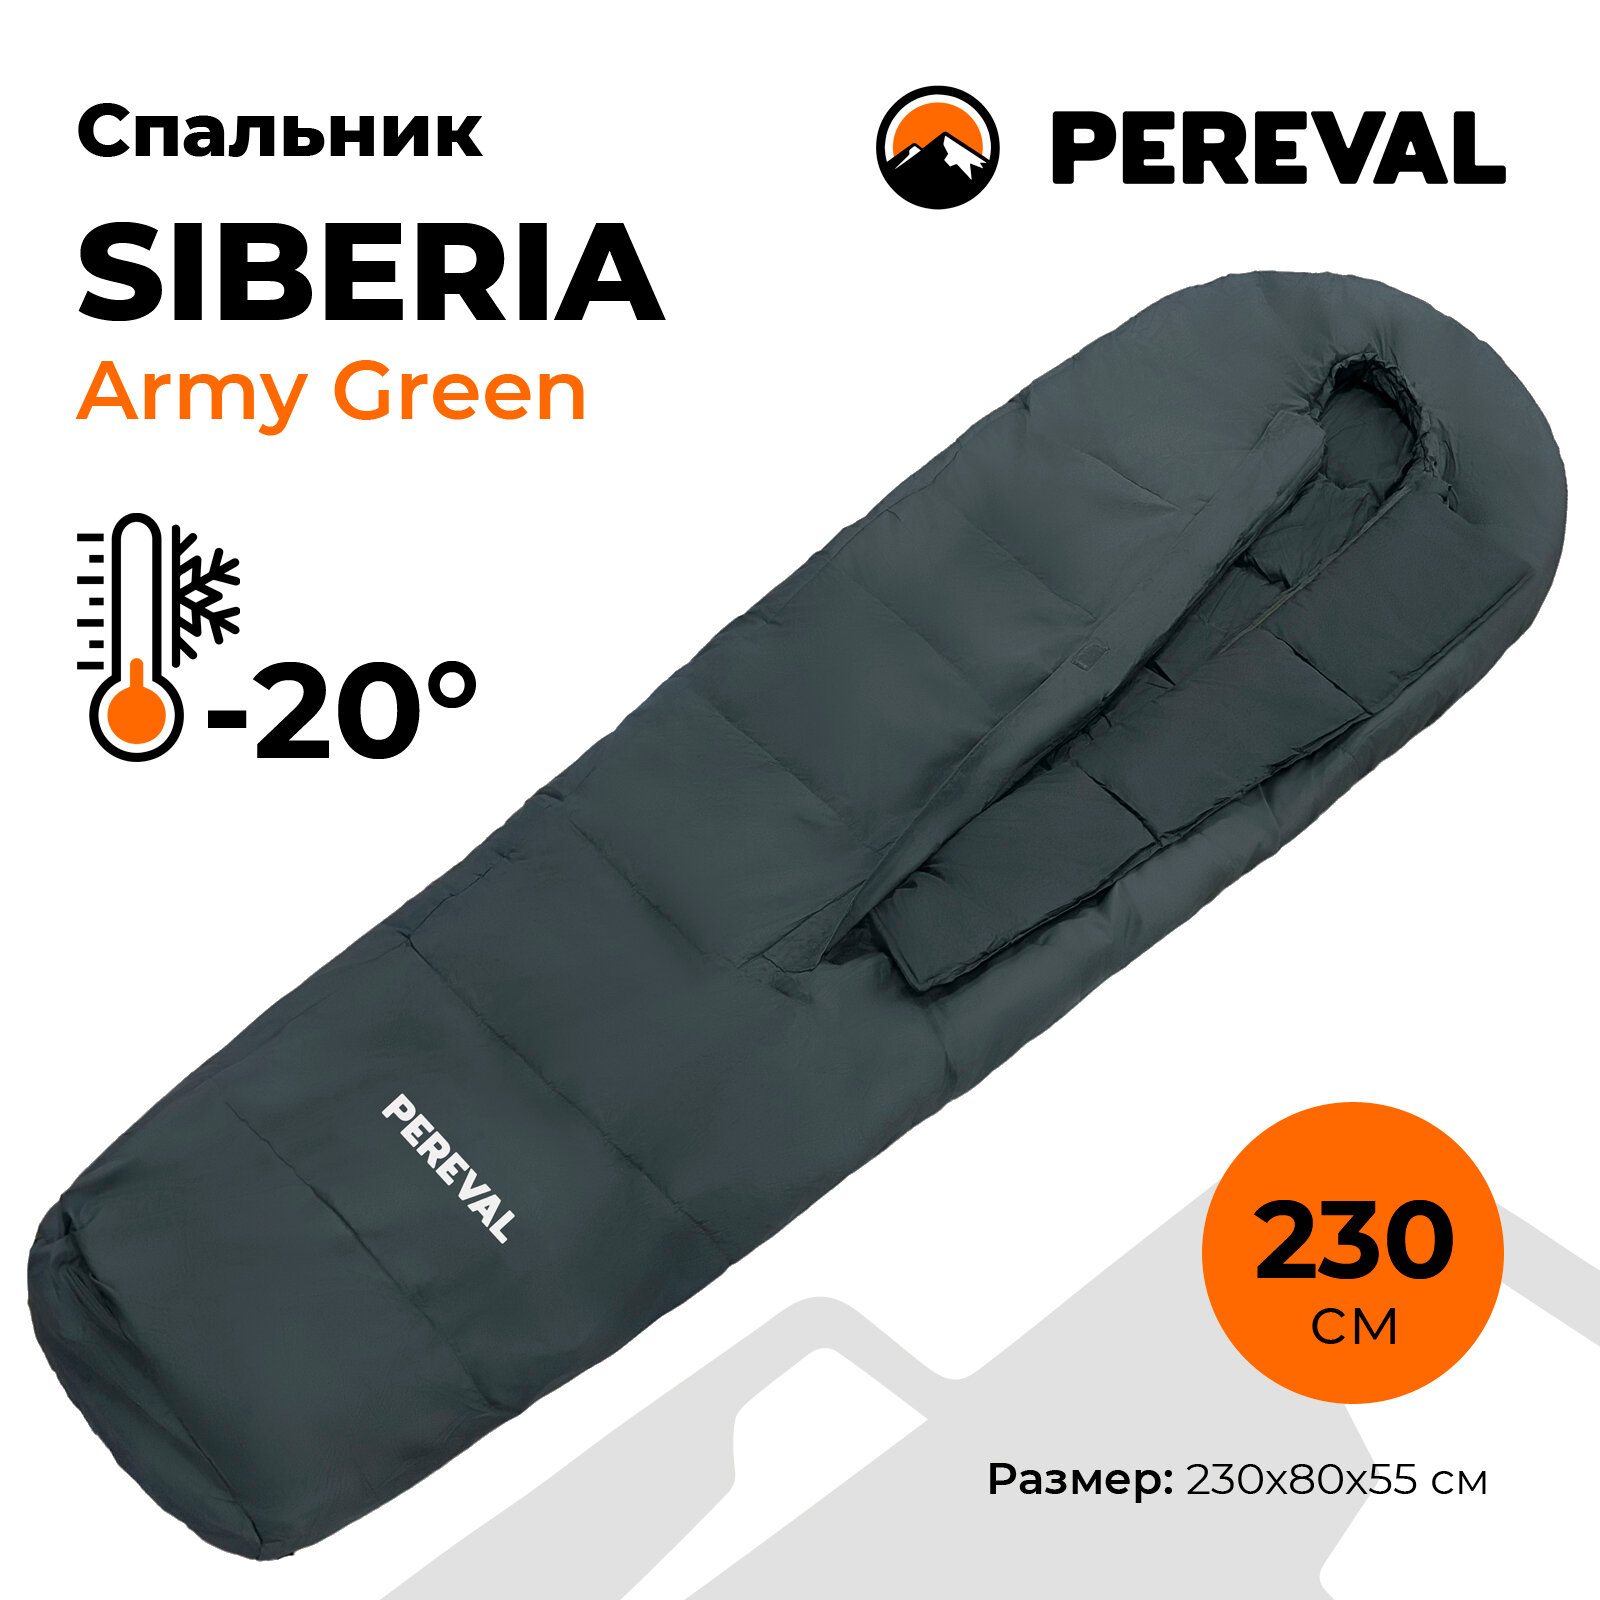 Спальный мешок -20 Pereval Siberia Army Green 230 см